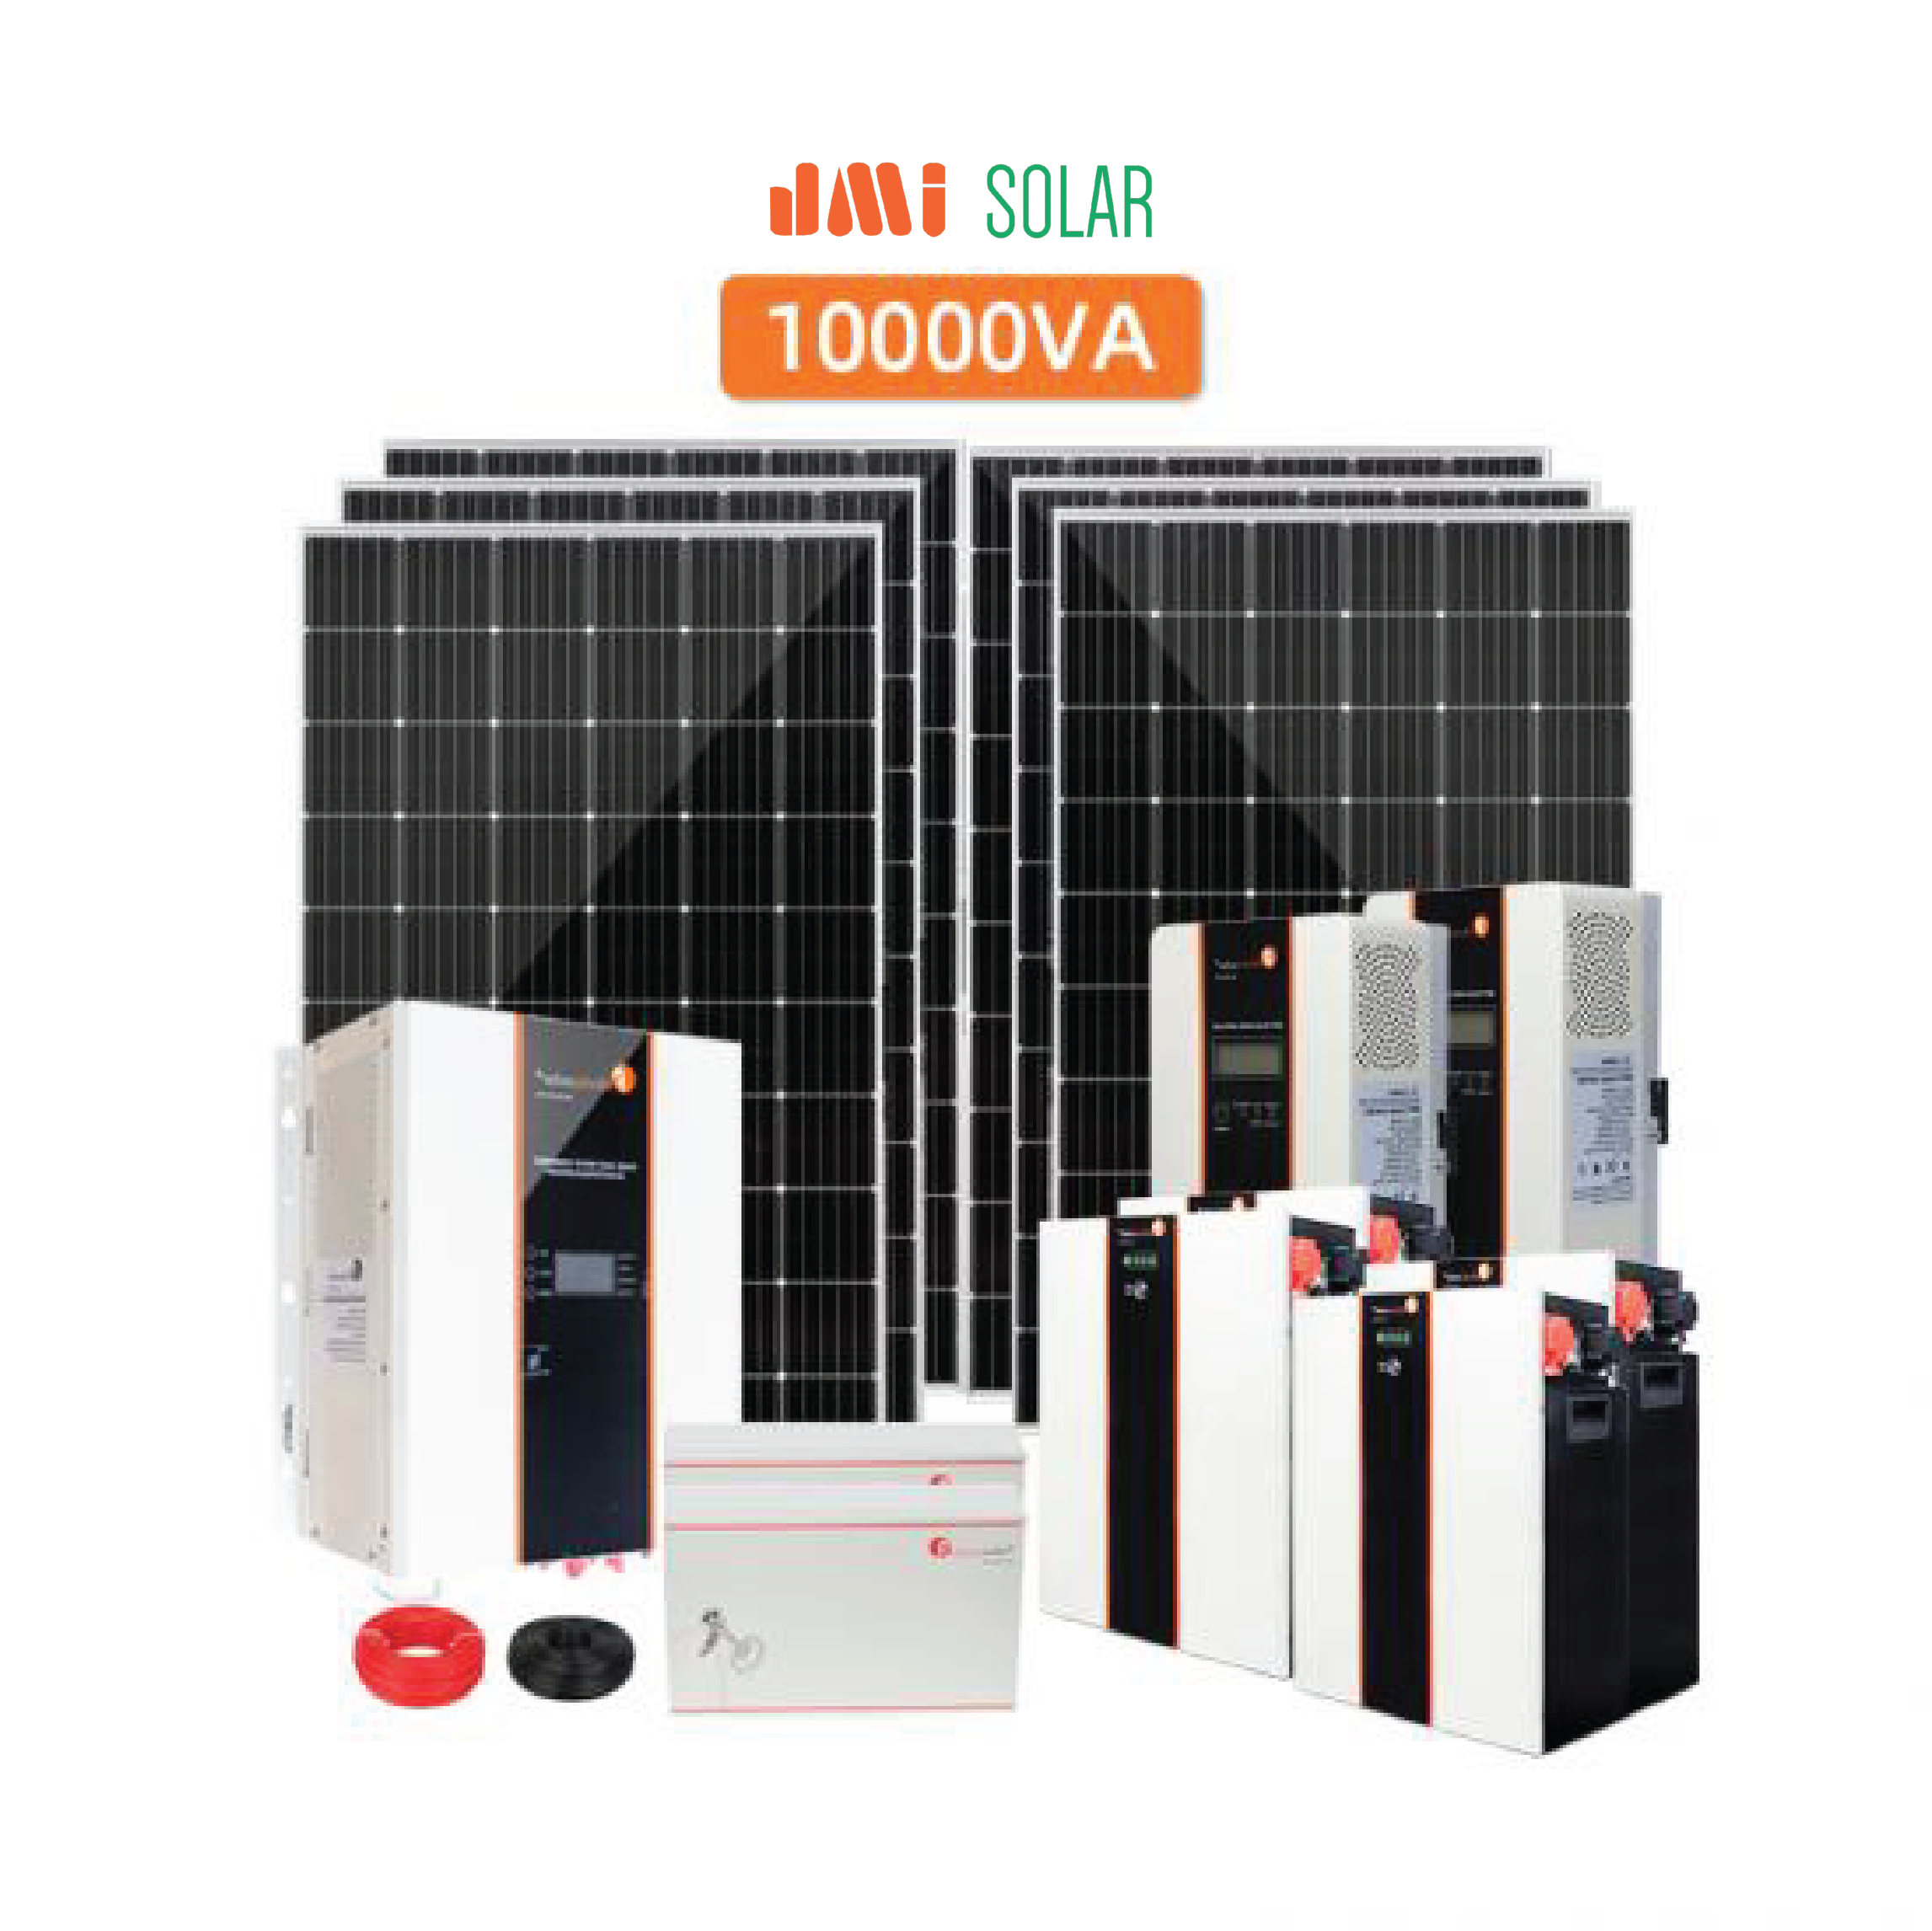 10KVA 48V Off Grid Solar Pv Power System Near Me Solar Energy Equipment Supplier For Home